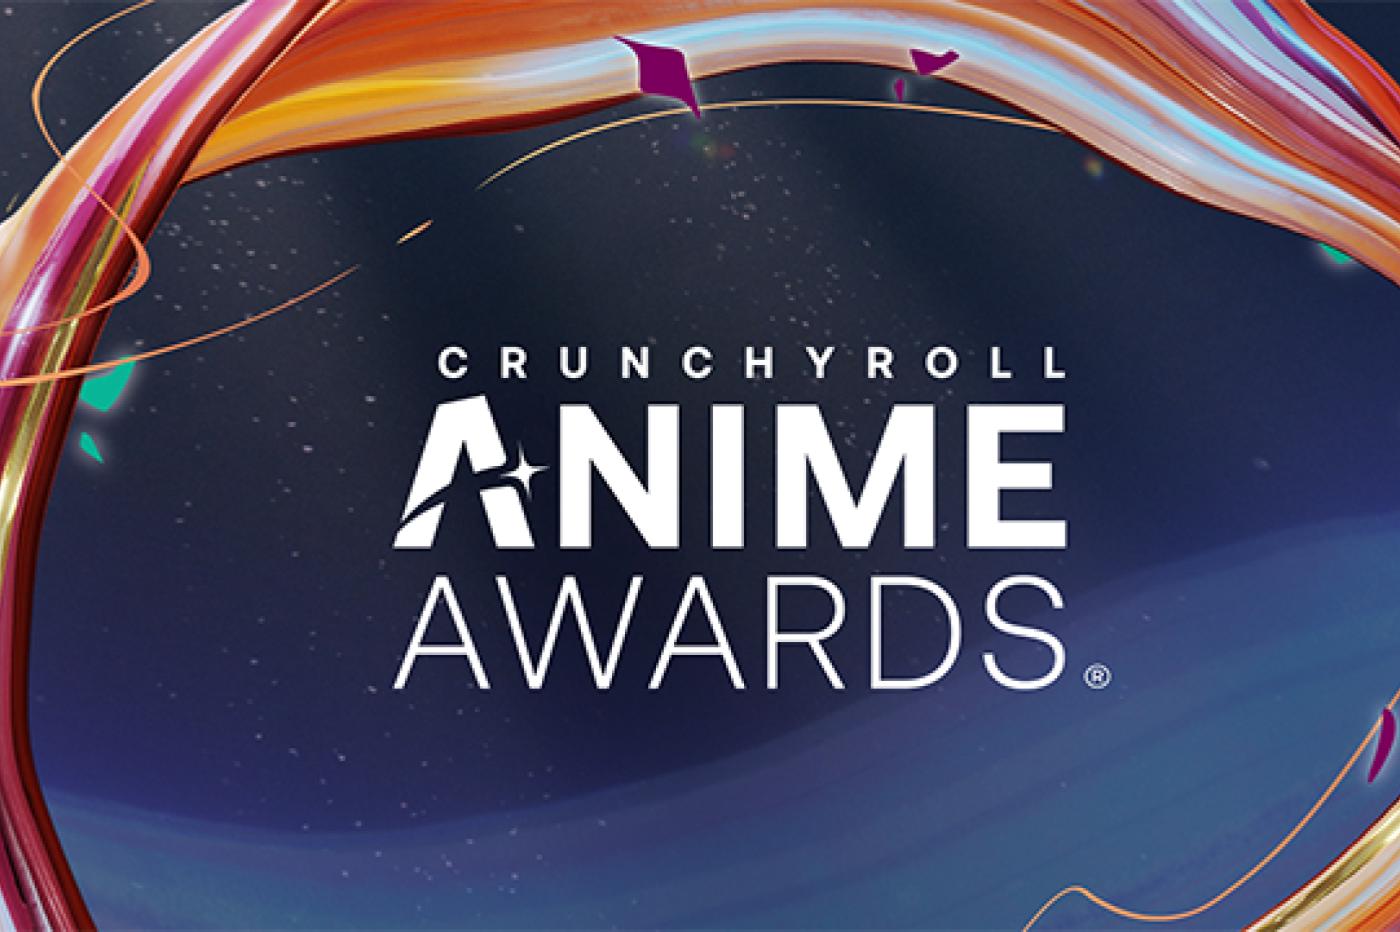 Anime Awards Crunchyroll